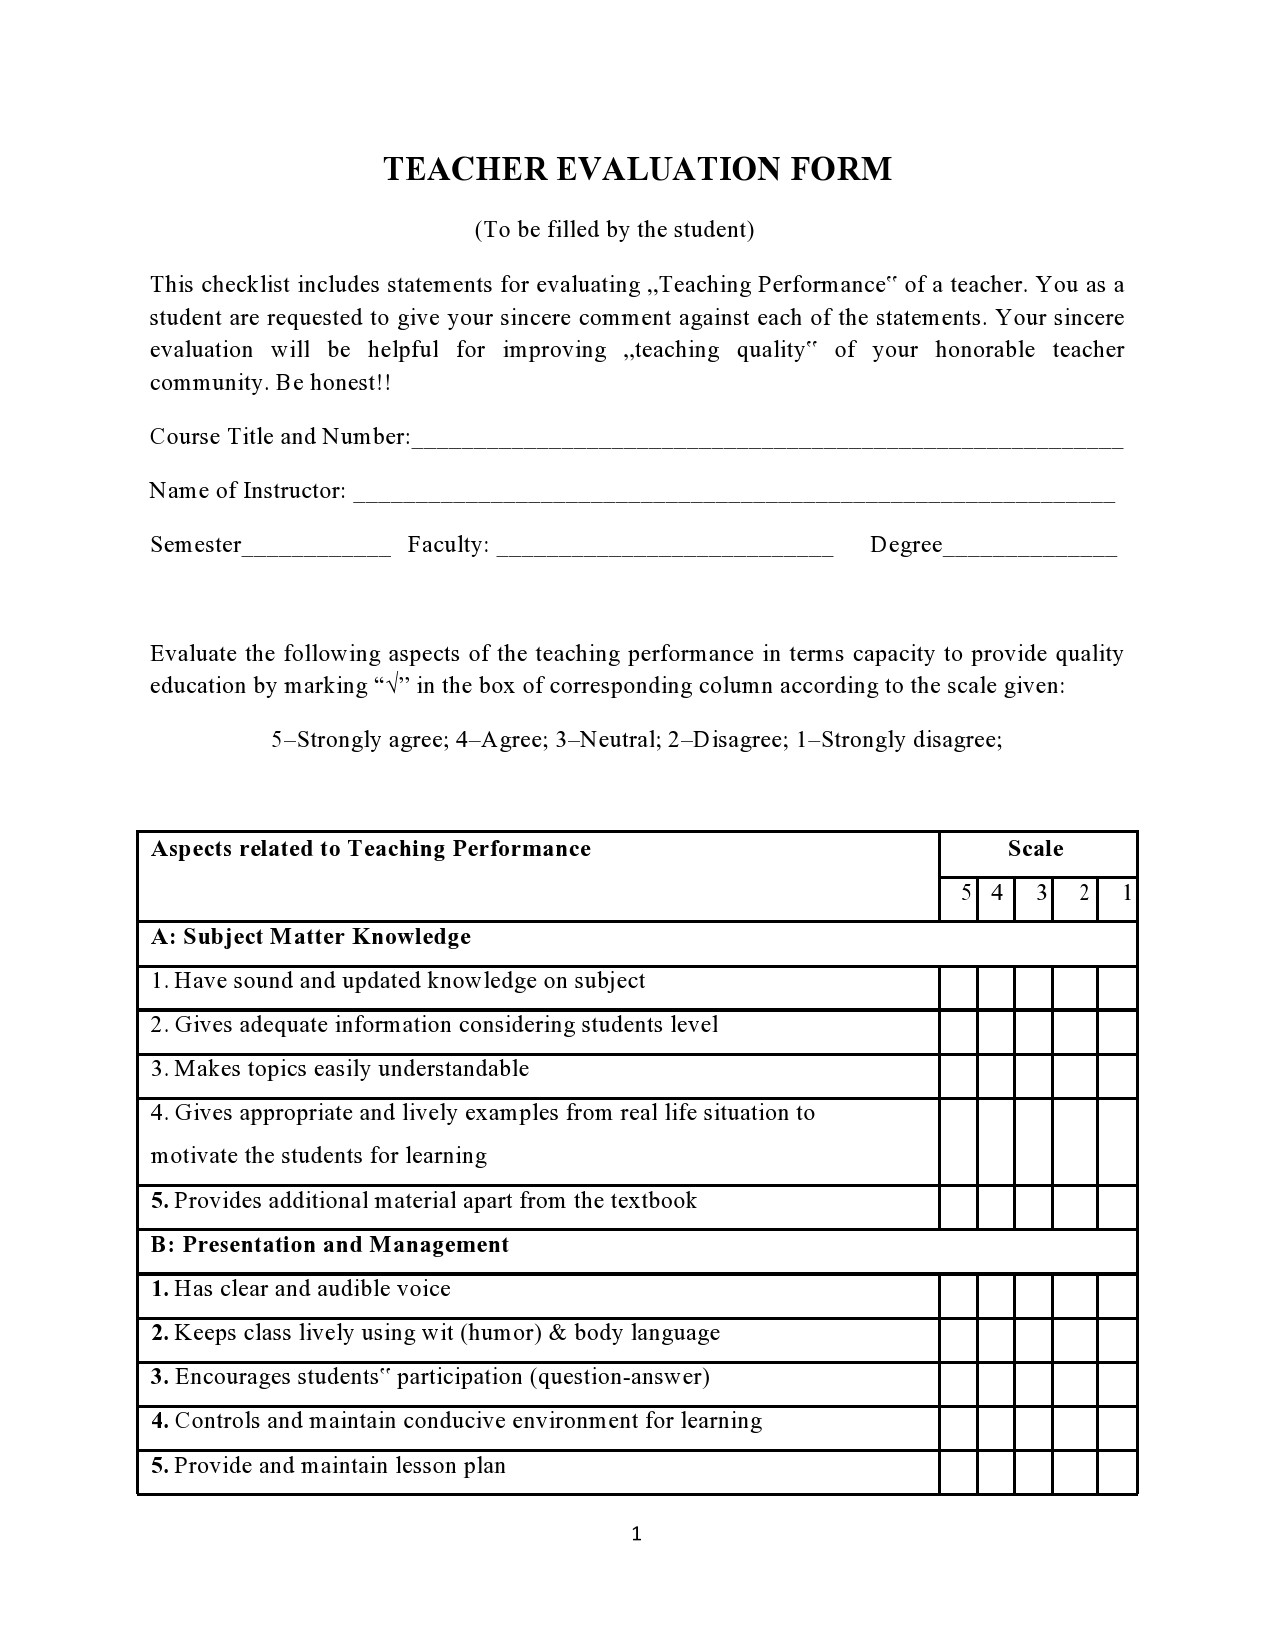 Free teacher evaluation form 04